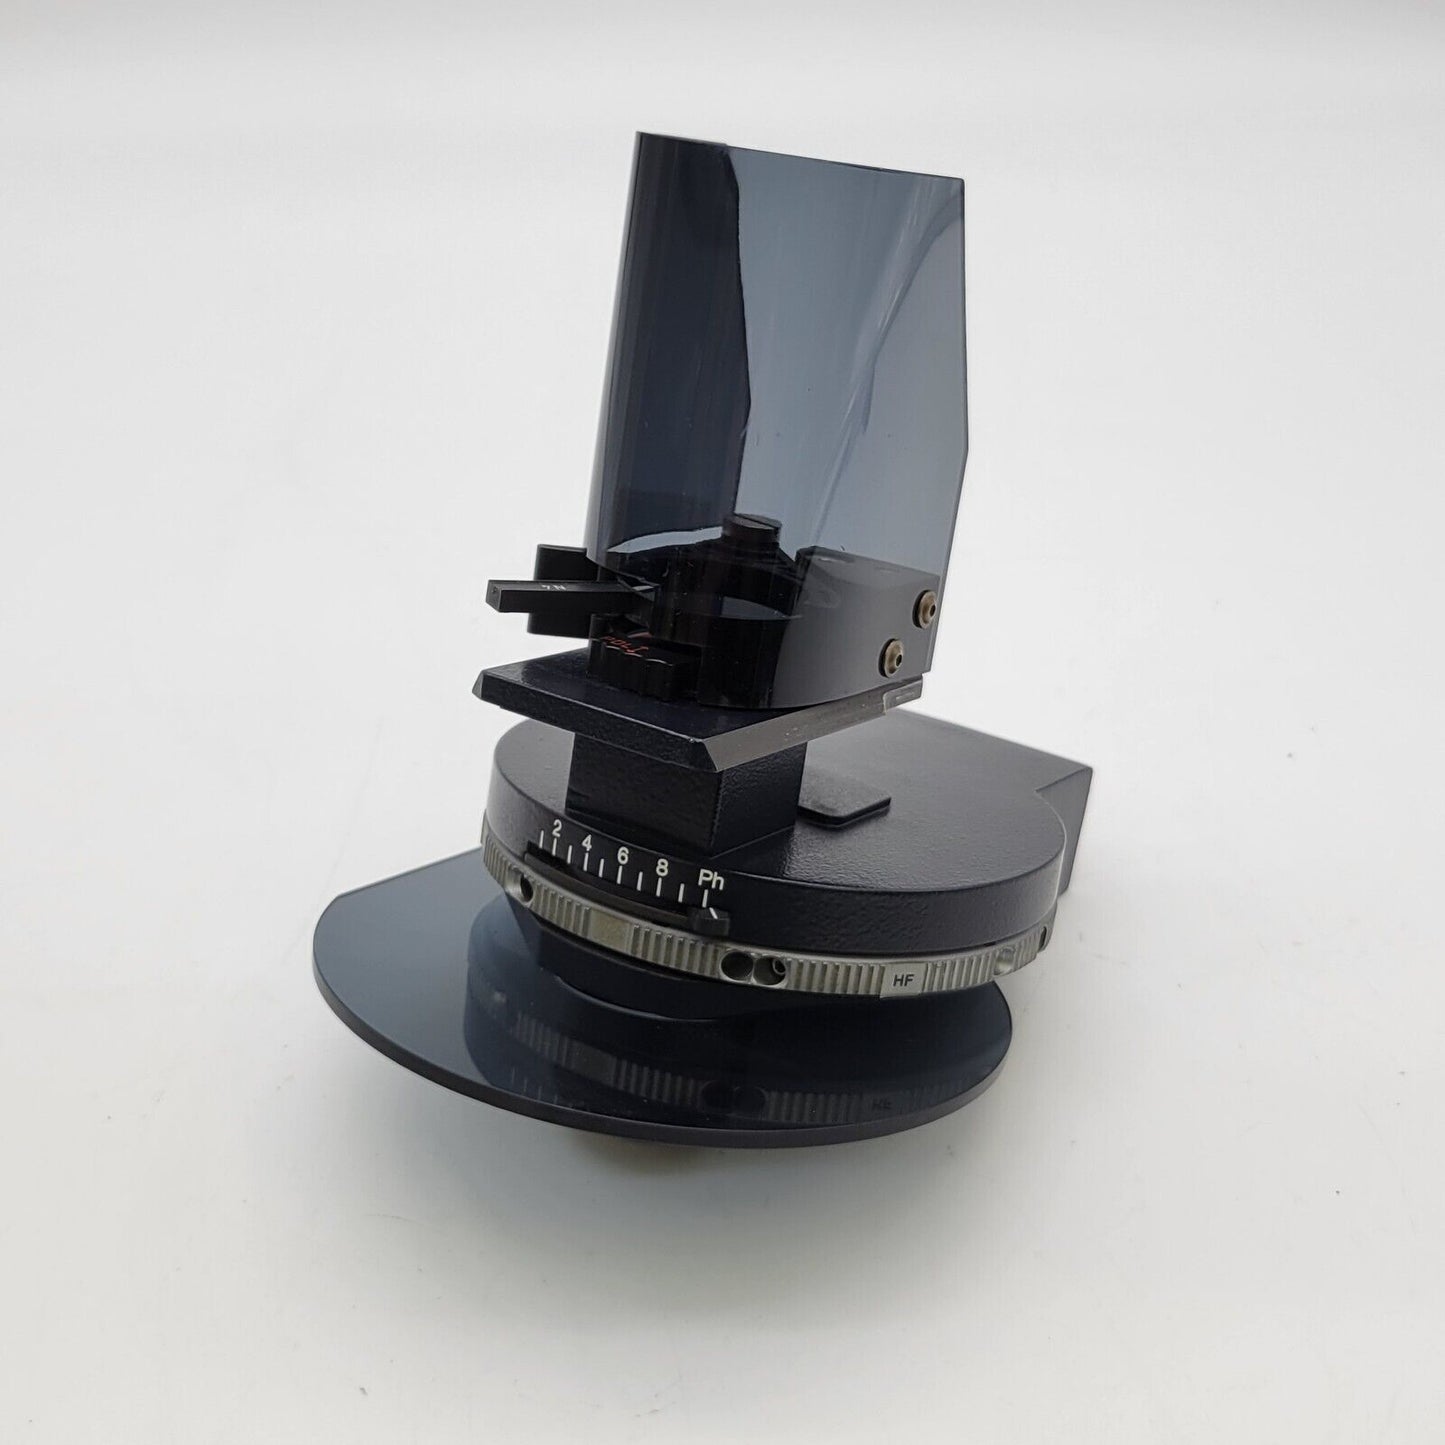 Leica Microscope Condenser Fluorescence Pol 521503 for DM Inverted - microscopemarketplace